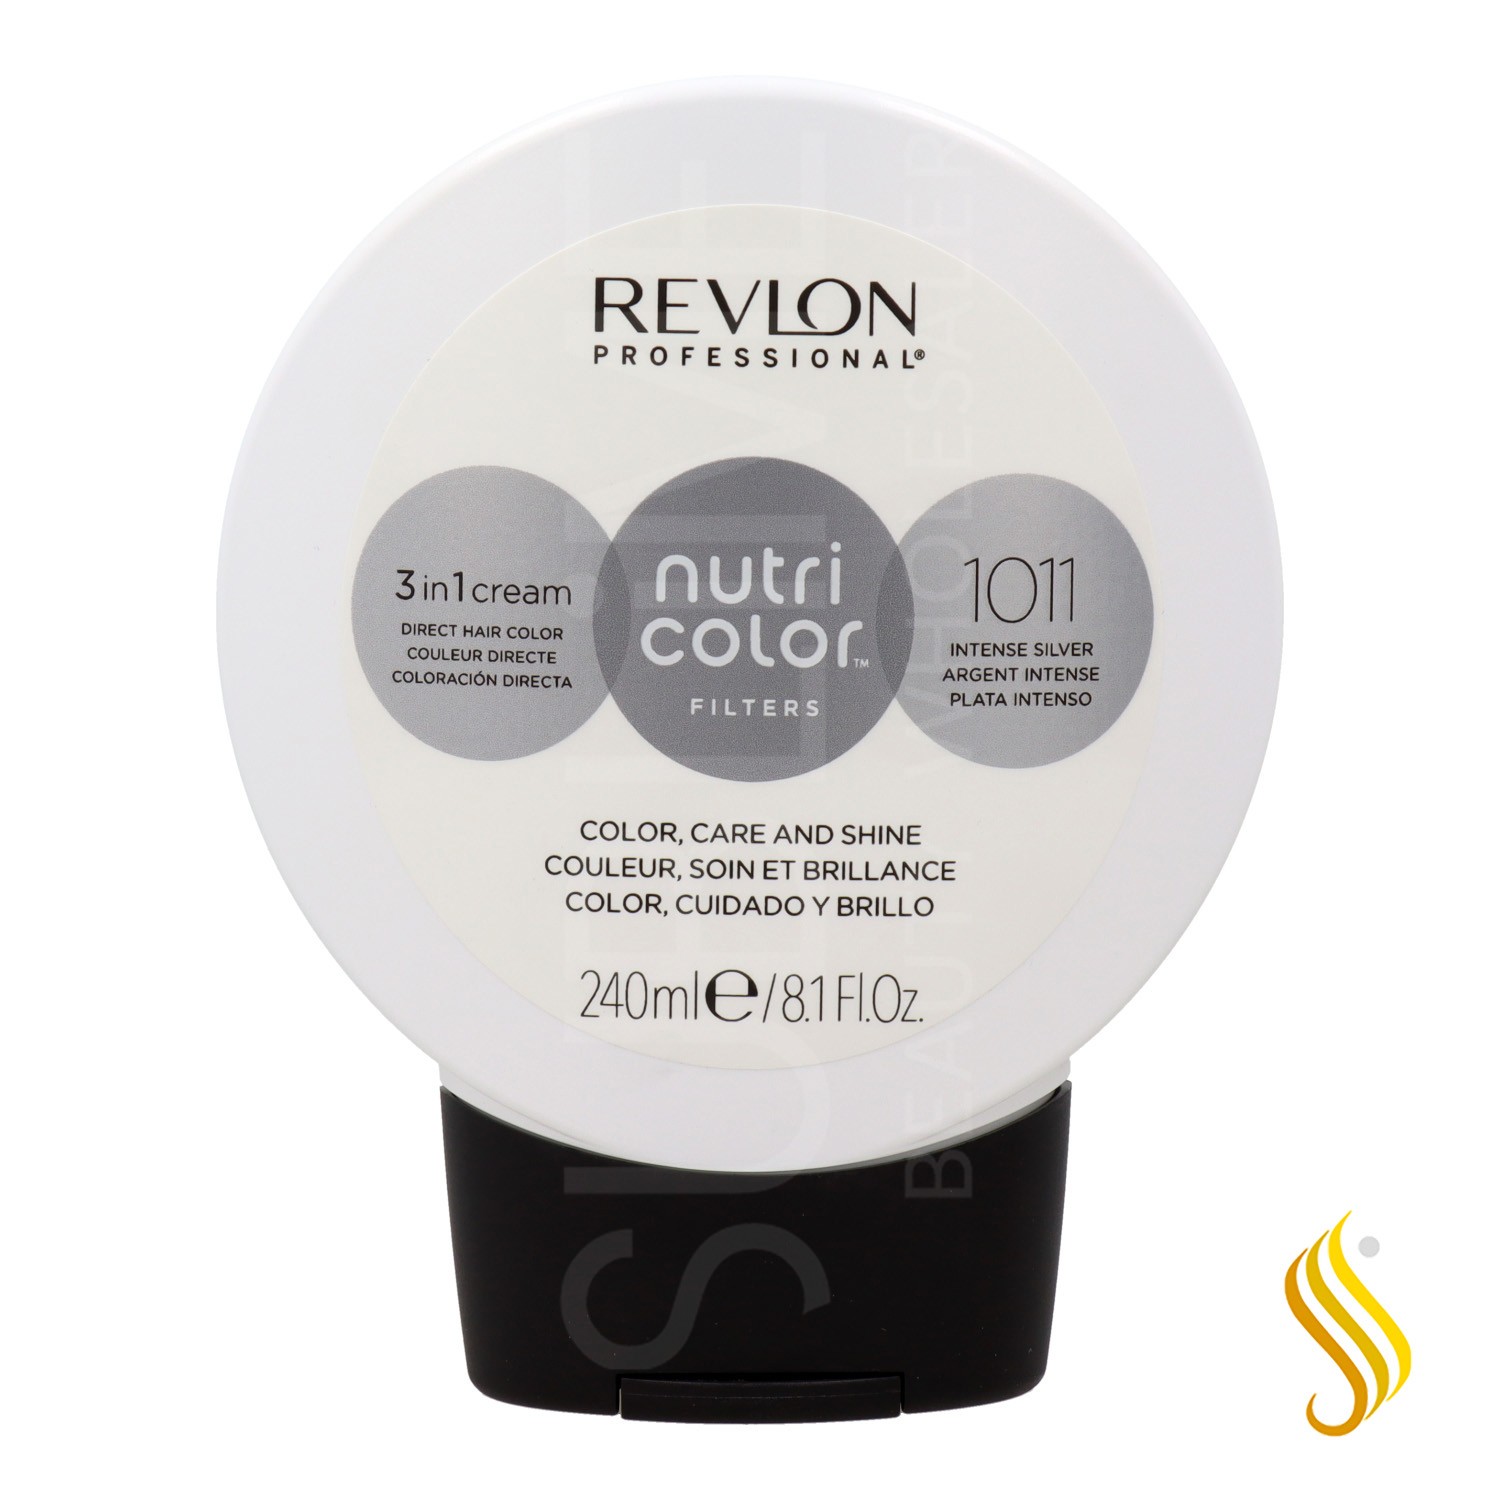 Revlon Nutri Color 1011 Plata Intenso 240 ml